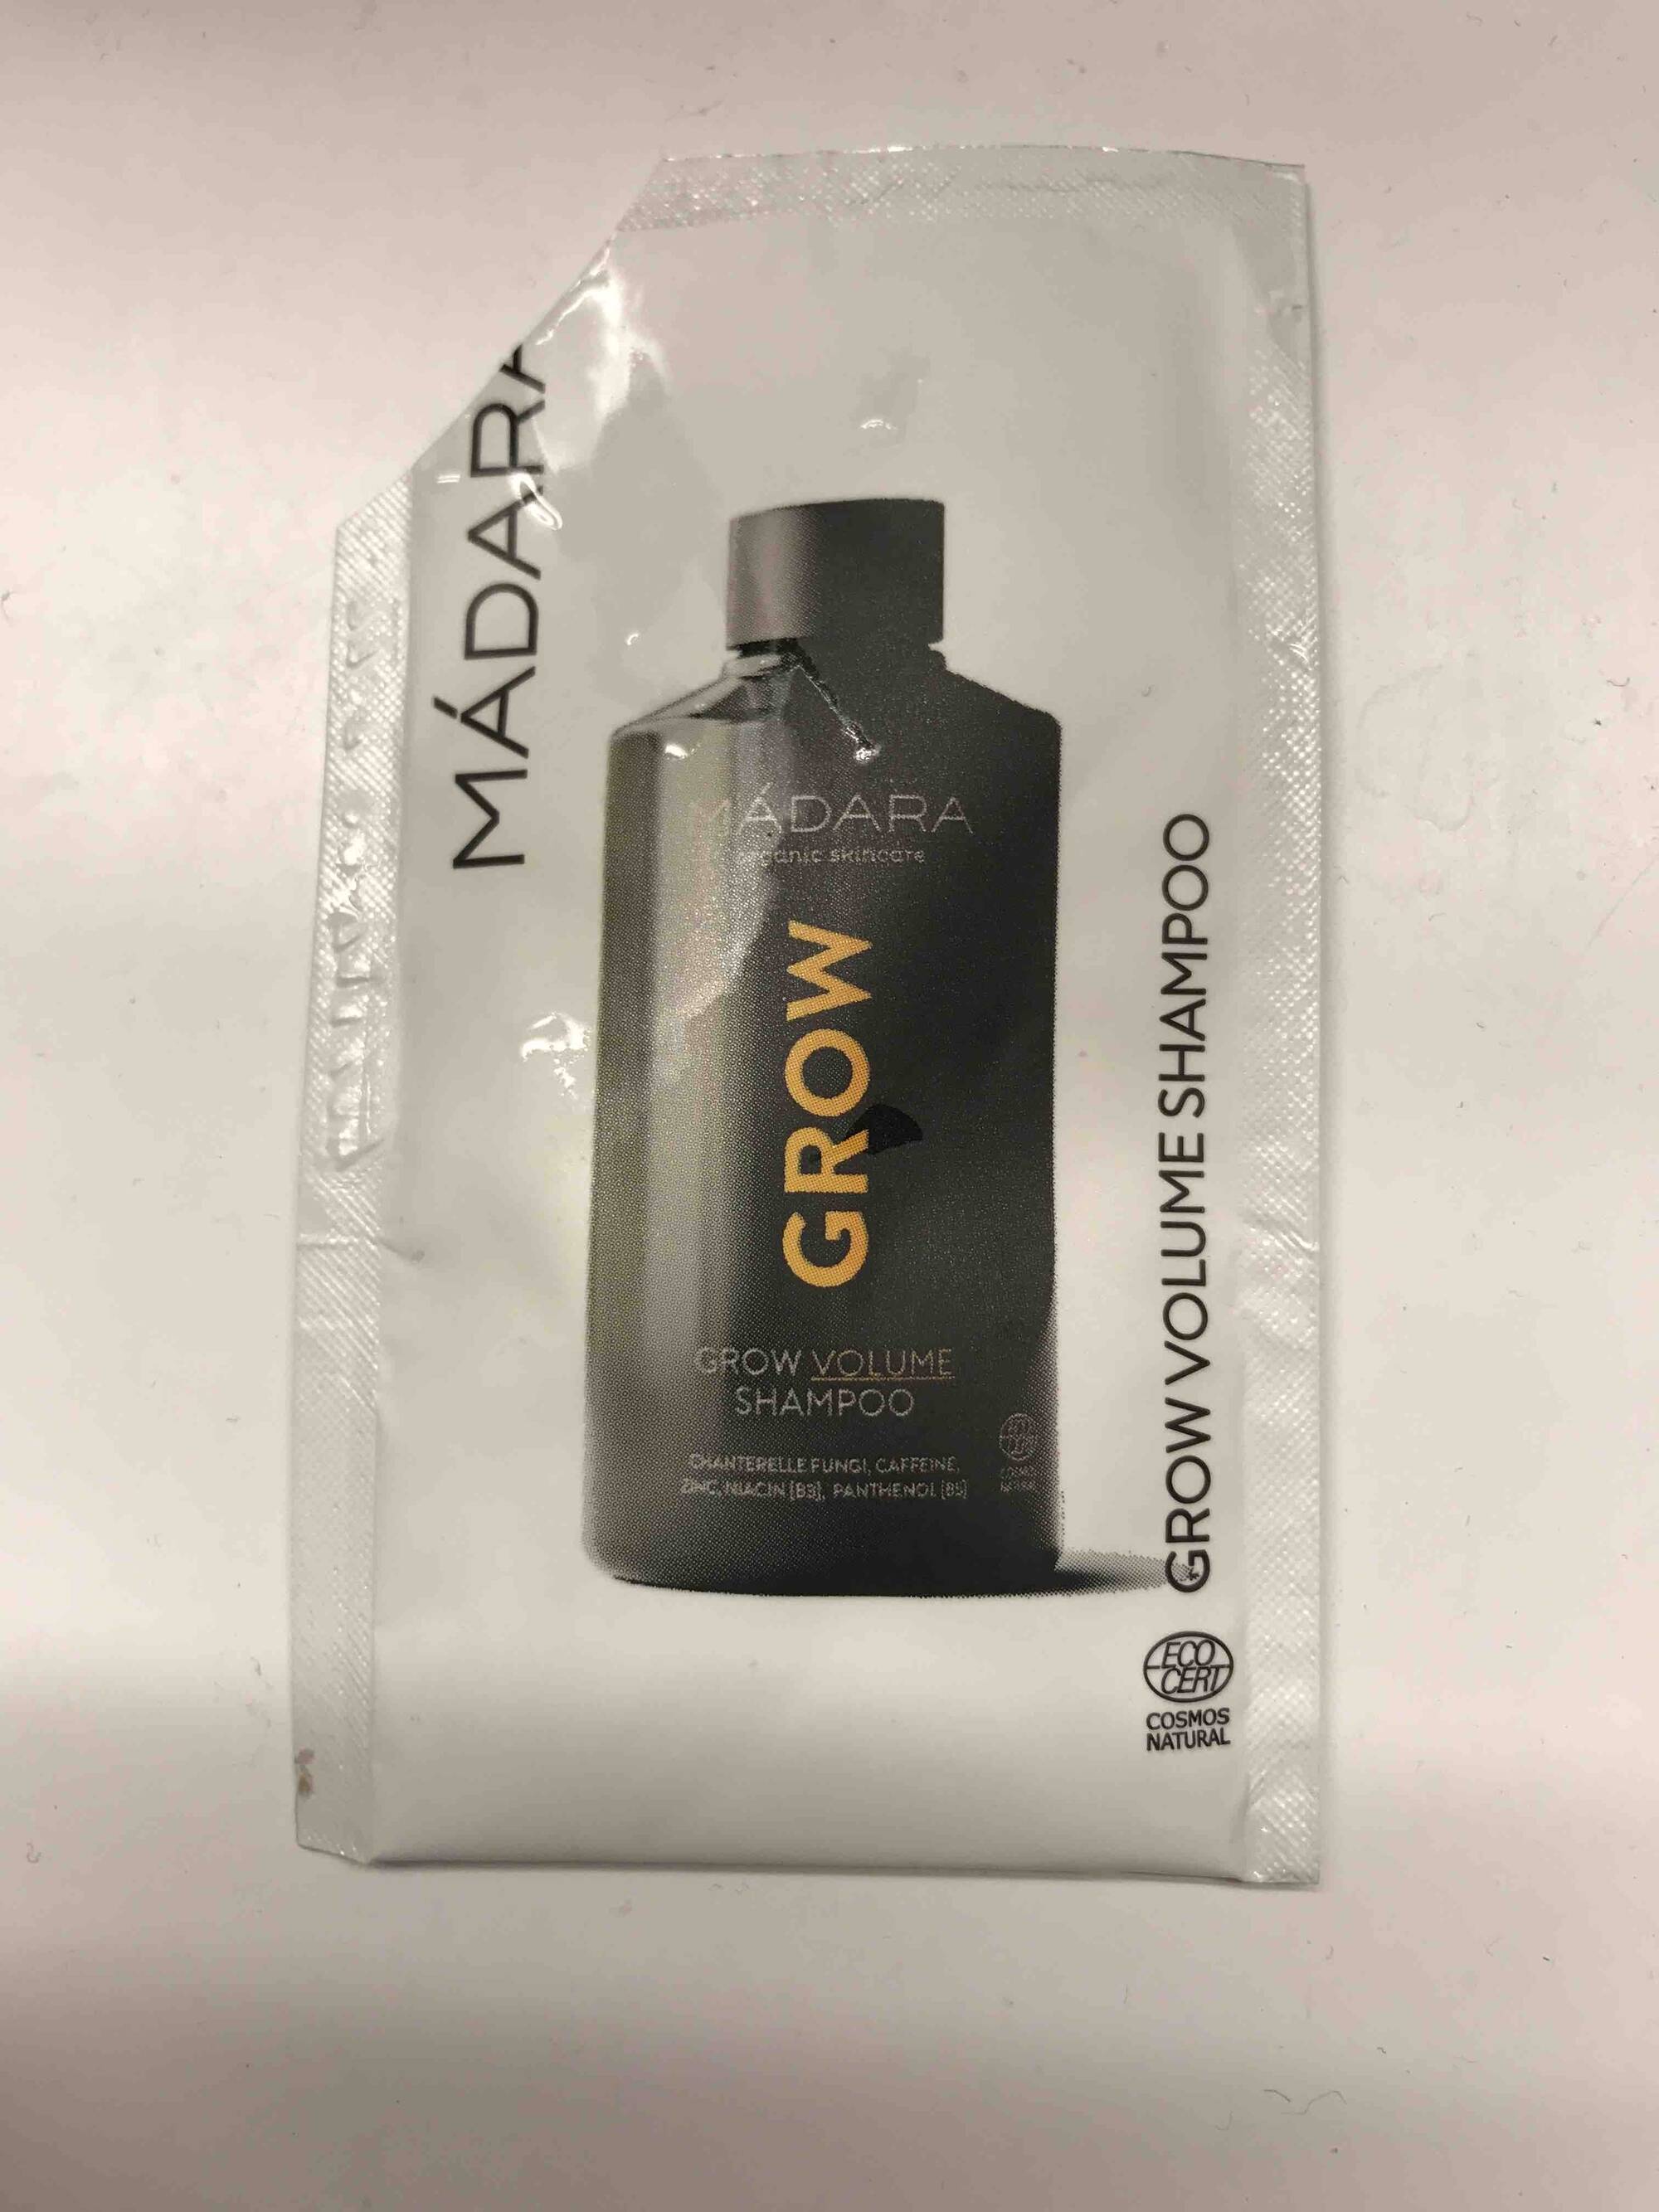 MÁDARA - Grow volume shampoo